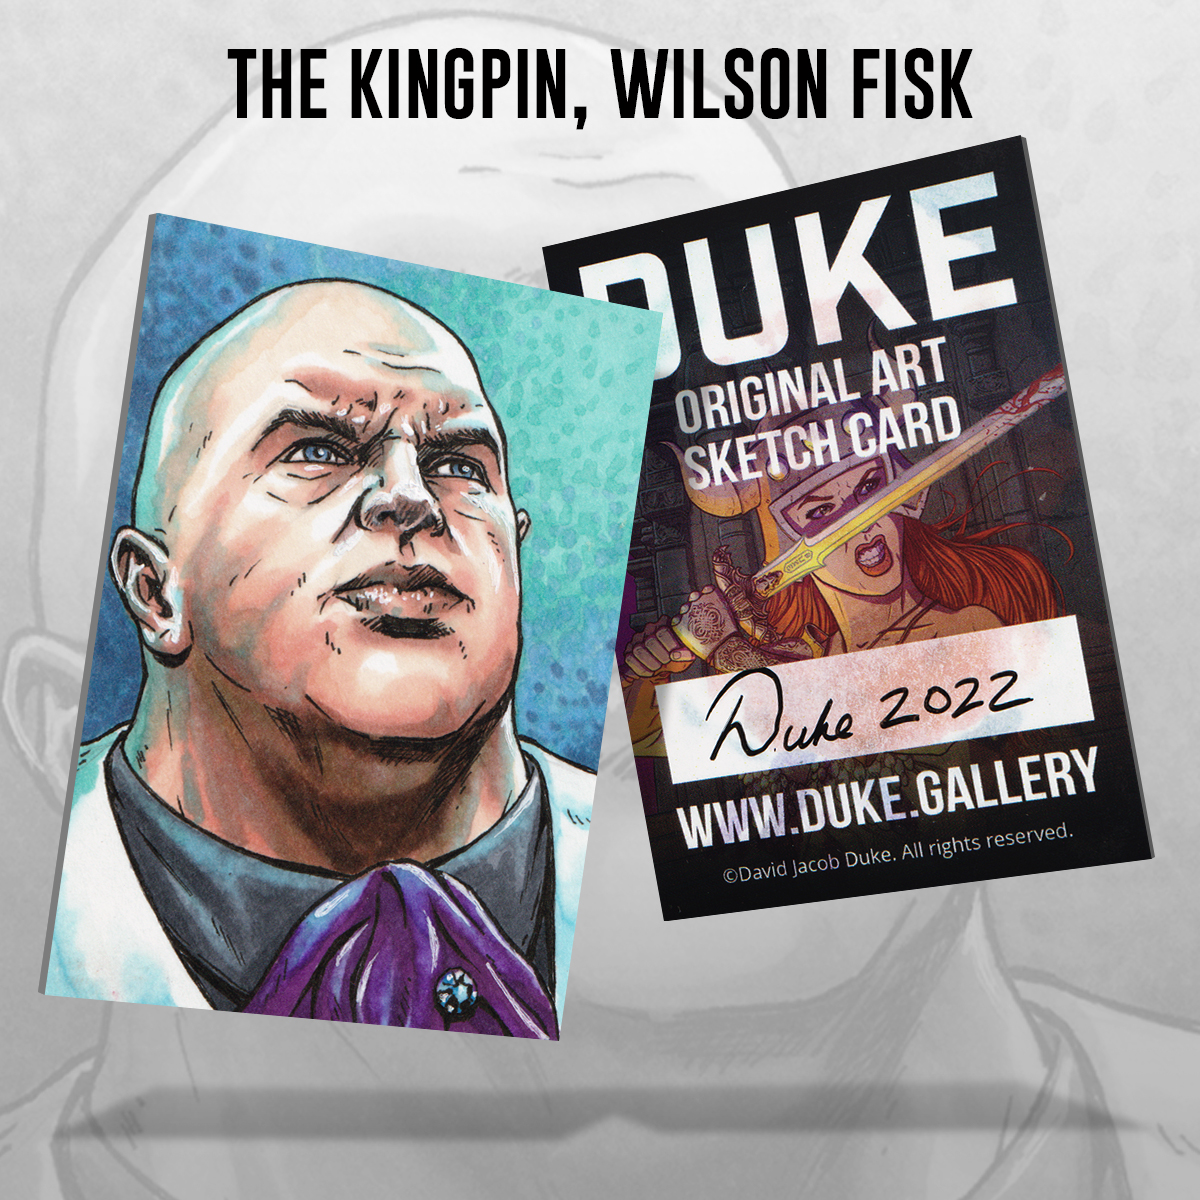 The Kingpin Wilson Fisk Sketch Card by Duke